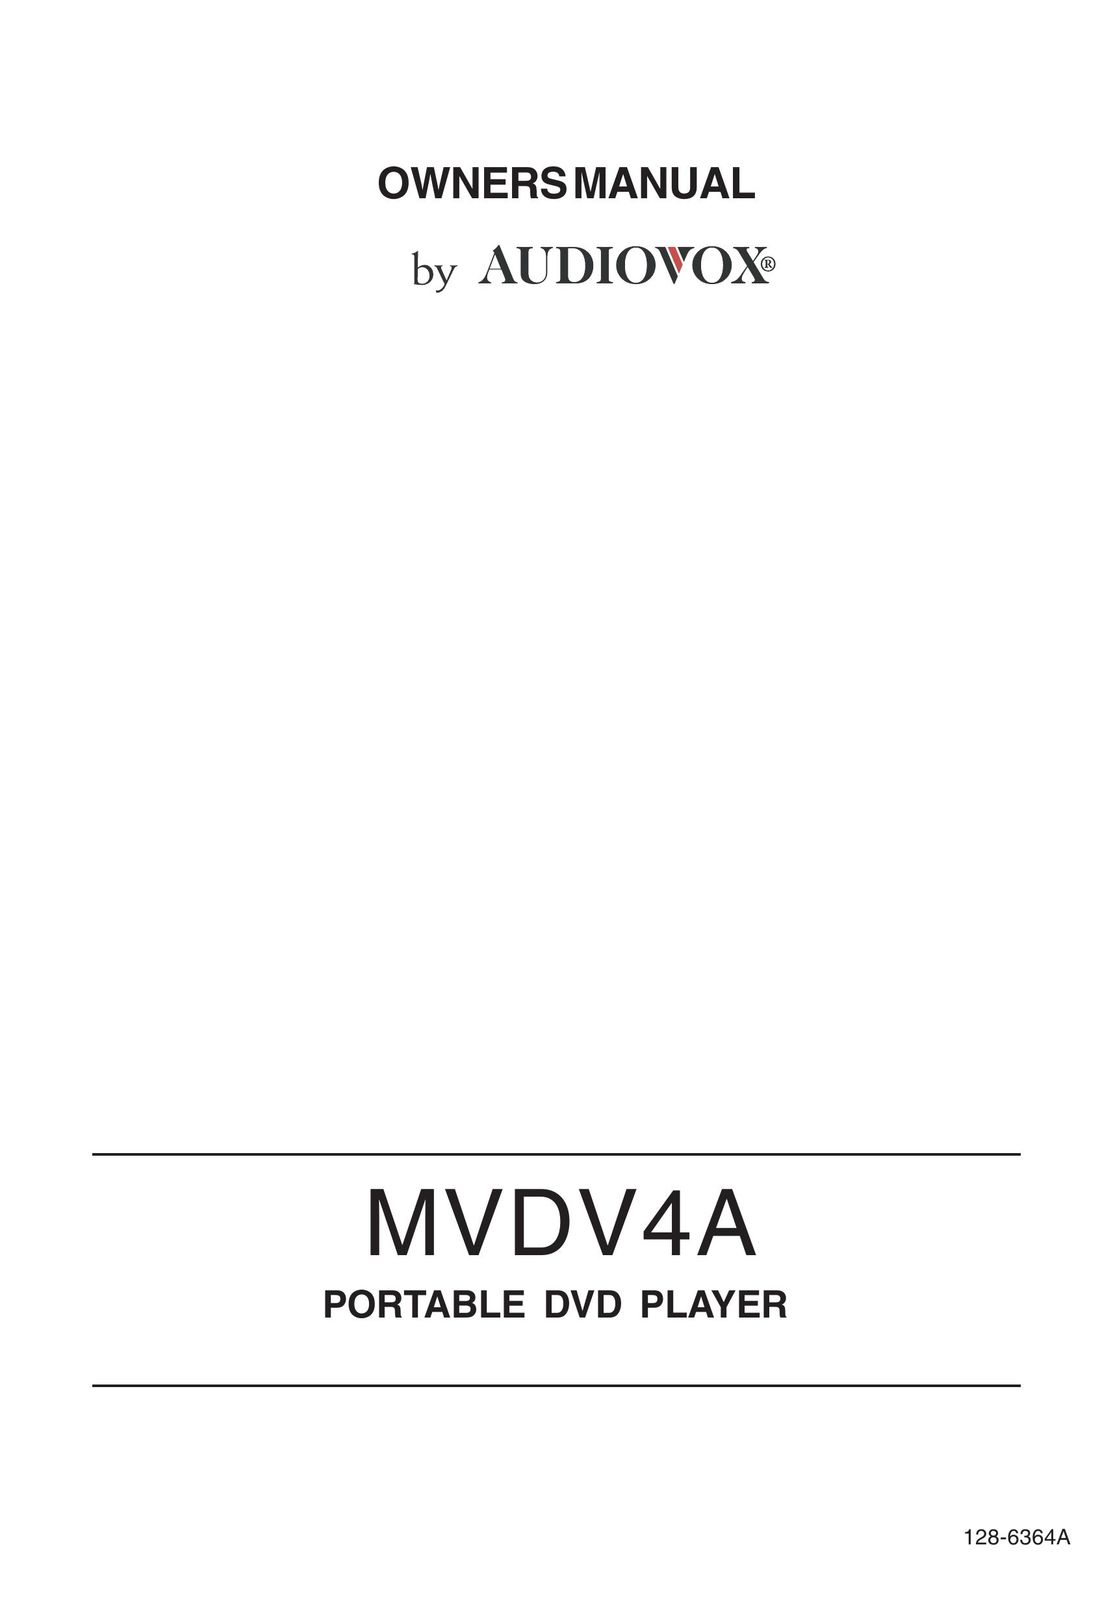 Audiovox MVDV4A DVD Player User Manual